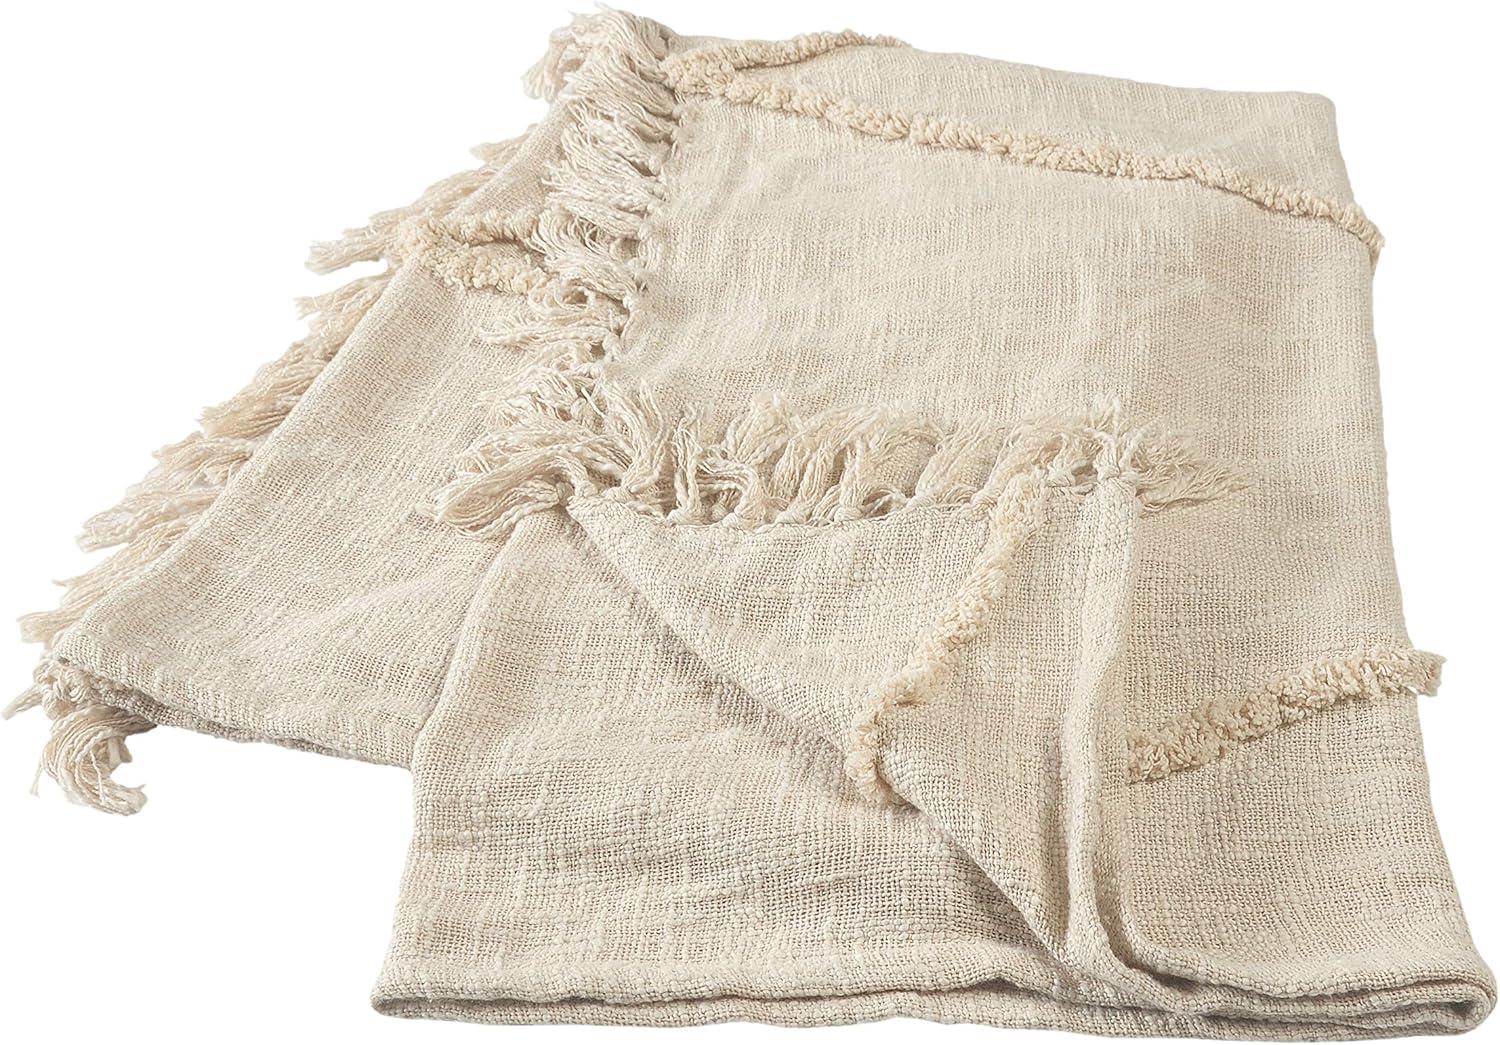 Birch & Cream Handwoven Cotton Throw Blanket with Fringe Accents